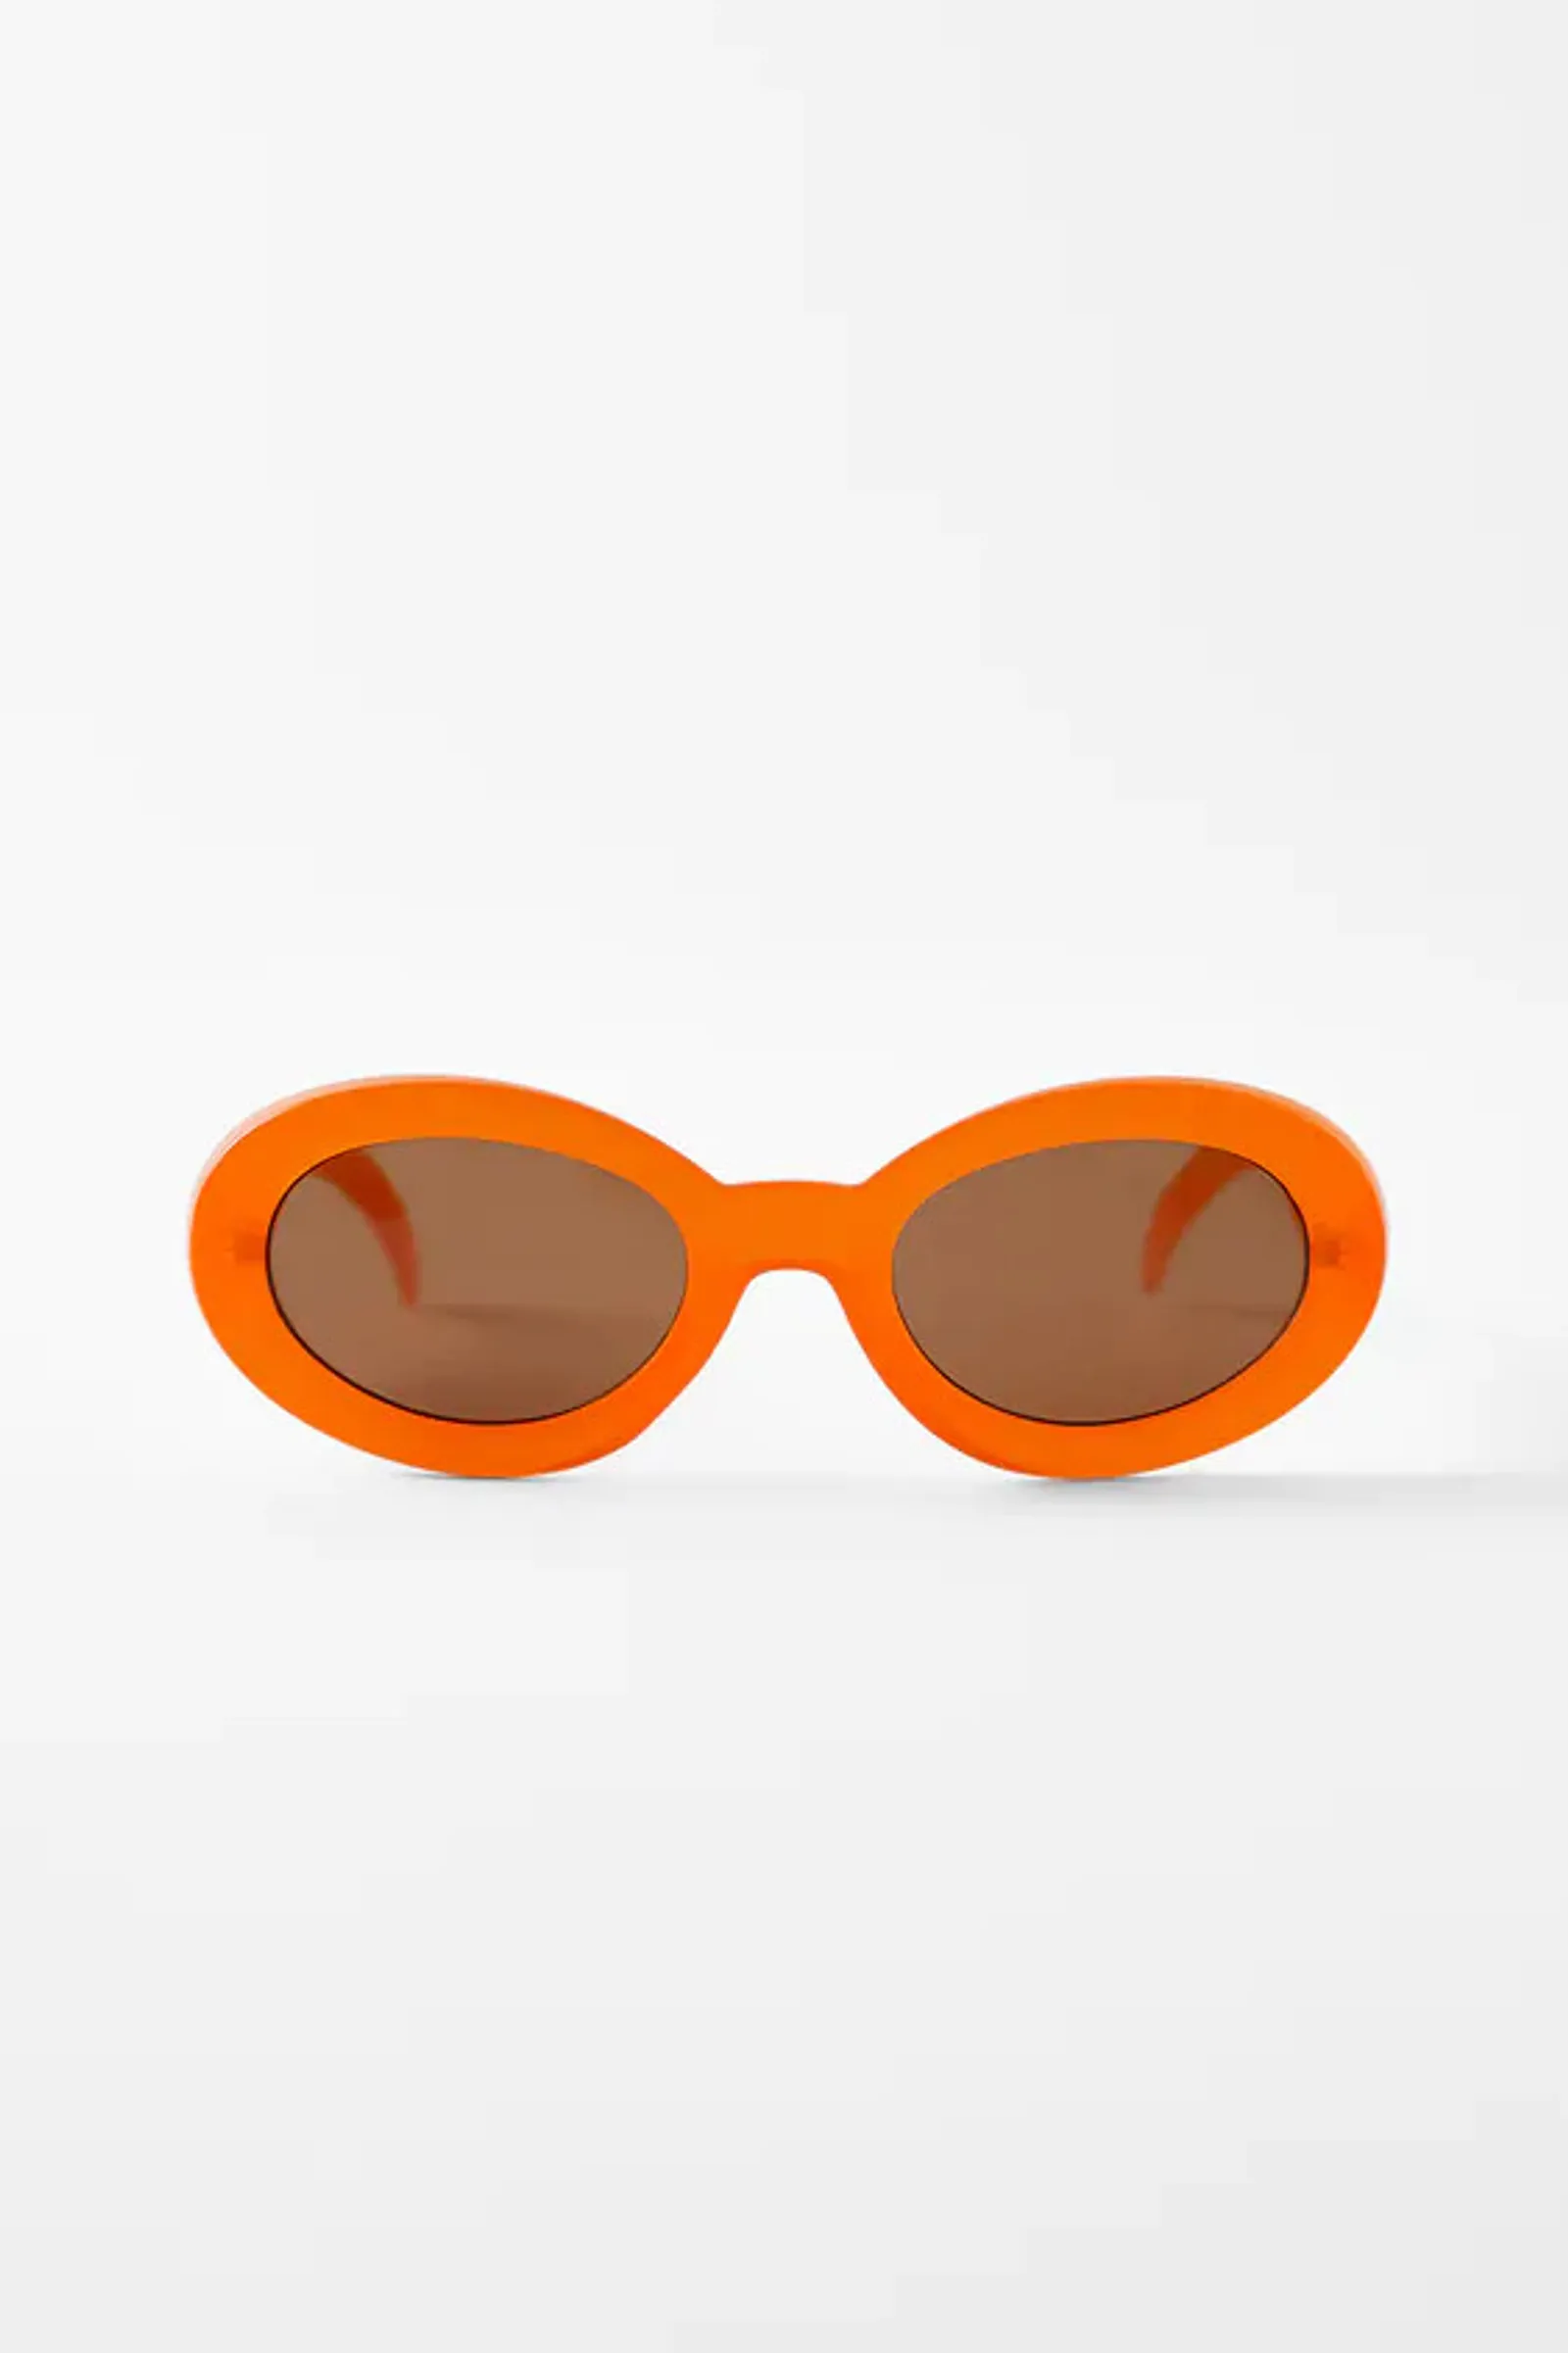 #PopbelaOOTD: Rekomendasi Kacamata Hitam 'Terjangkau' untuk Berjemur